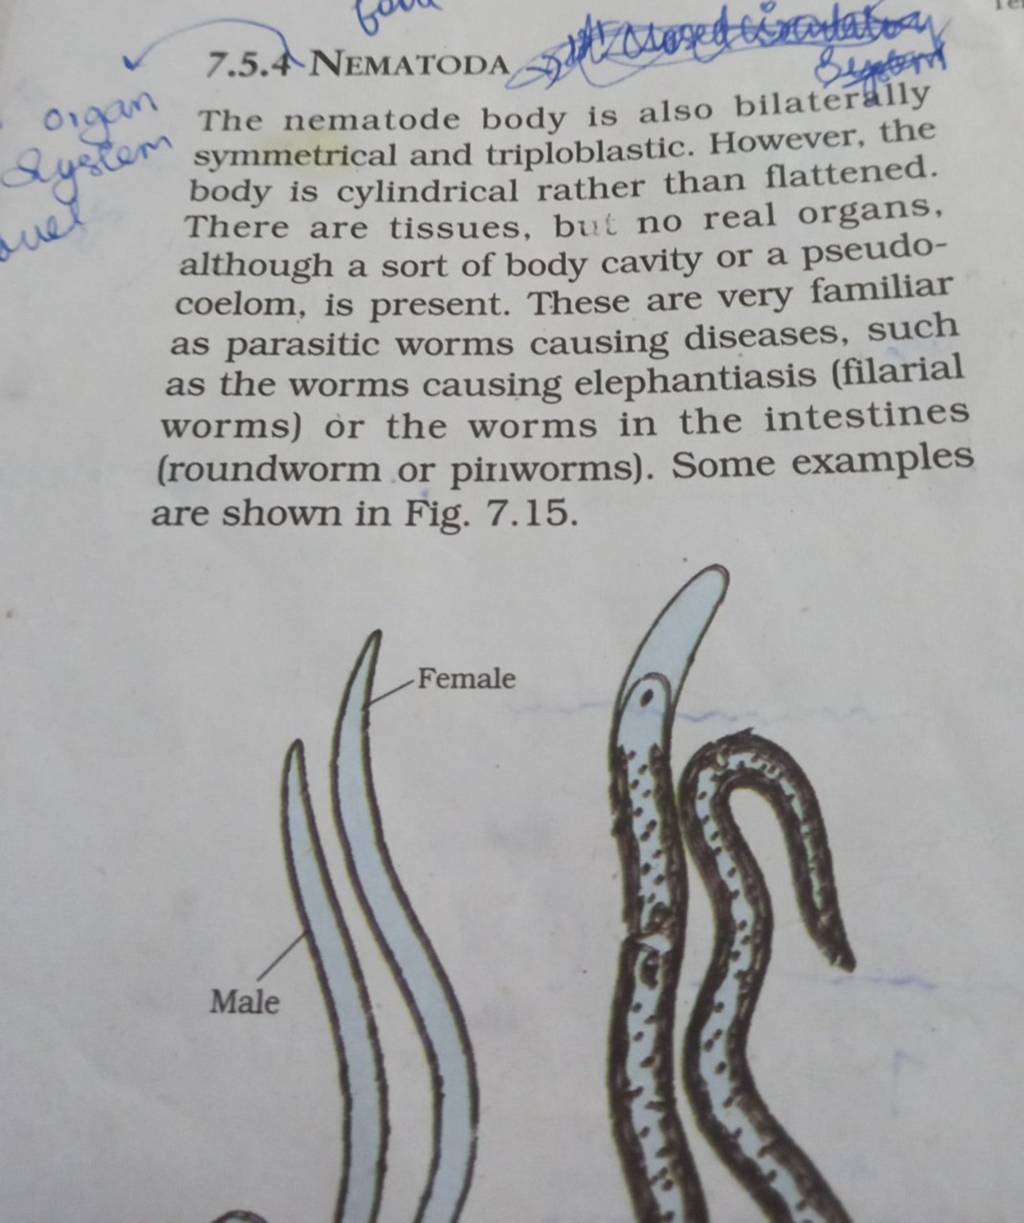 organ The nematode body is also bilaterdily symmetrical and triploblastic..